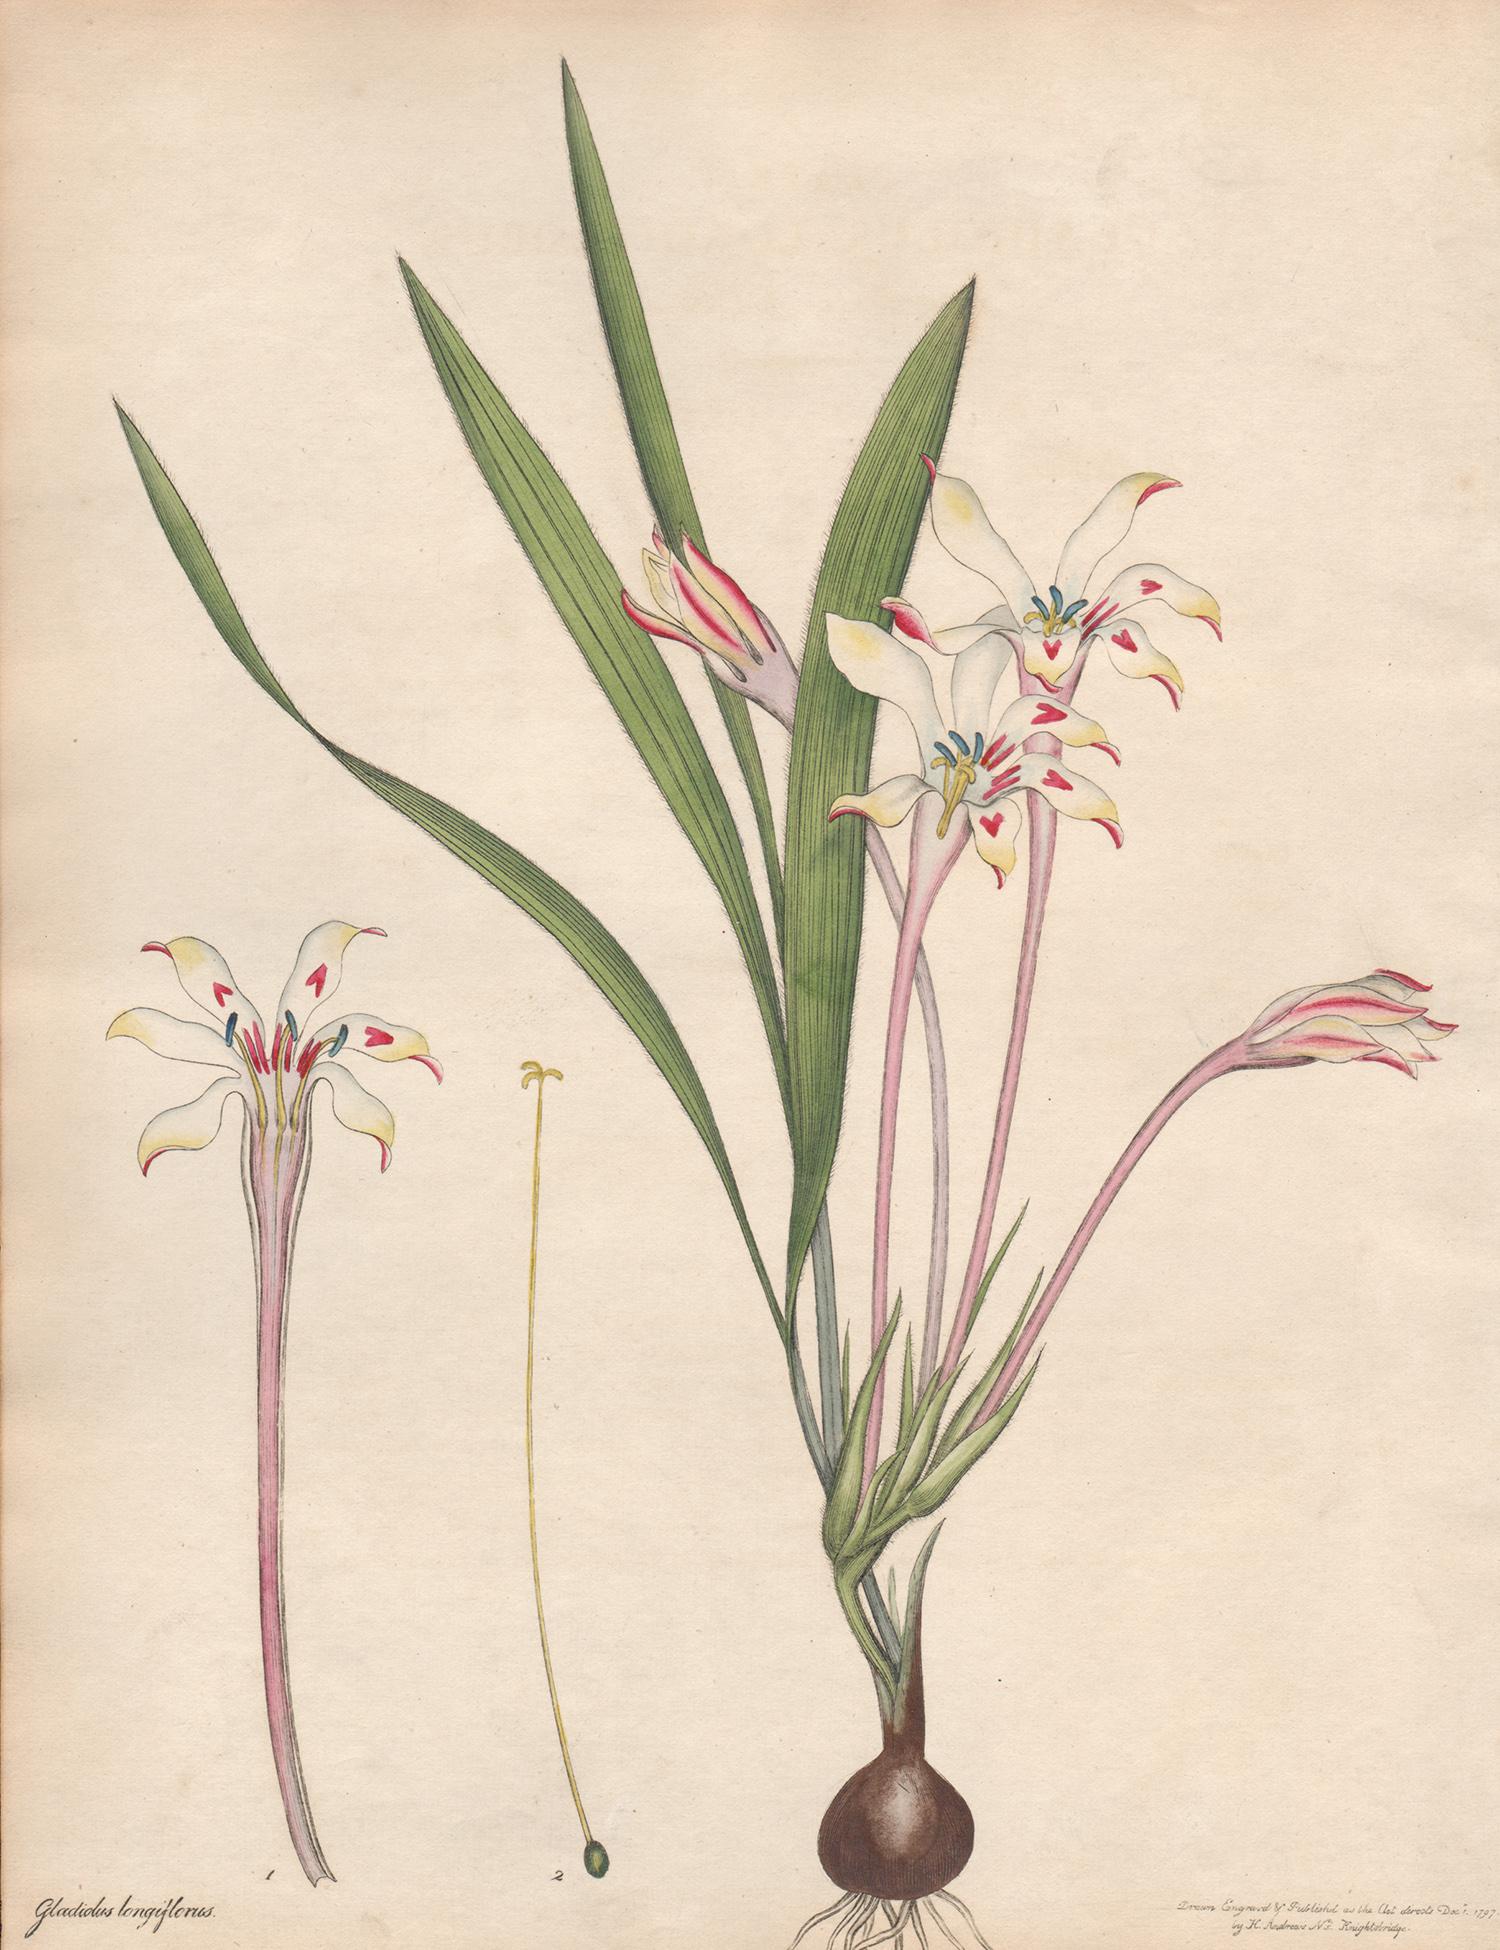 Henry C Andrews Still-Life Print - Gladiolus Longiflorus - English Henry Andrews botanical flower engraving, c1800